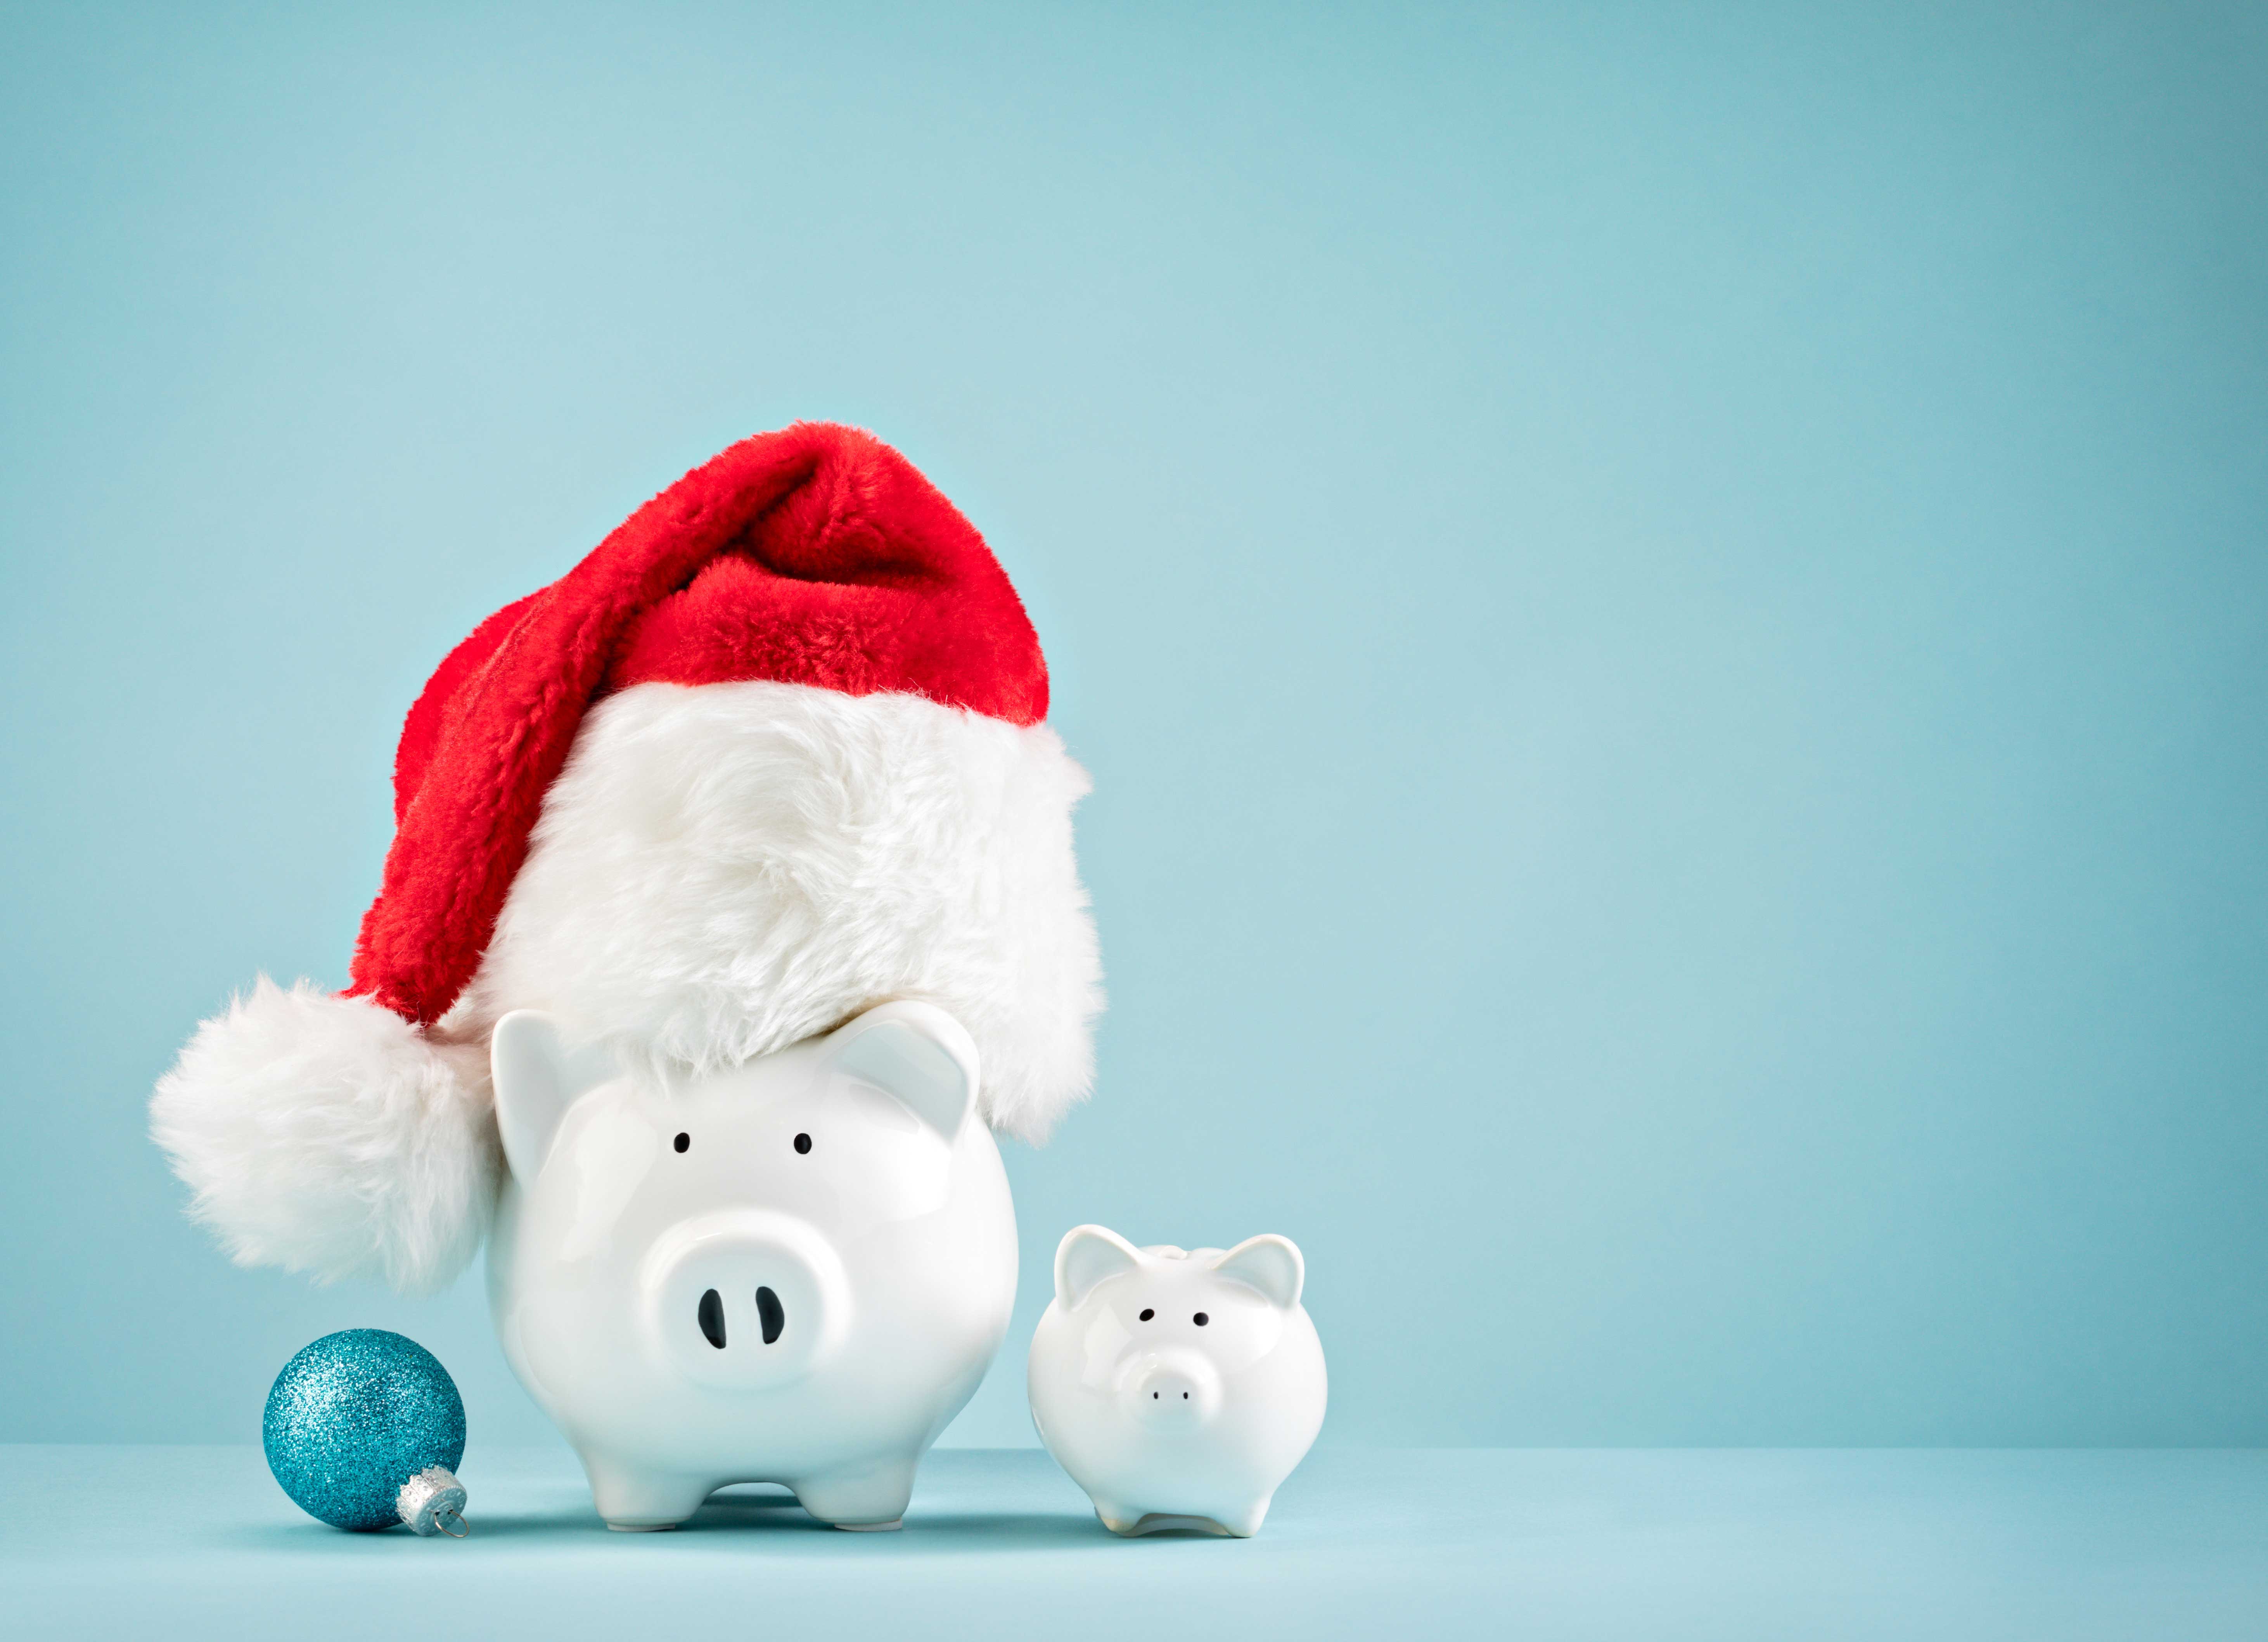 A piggy bank wearing a Christmas hat.